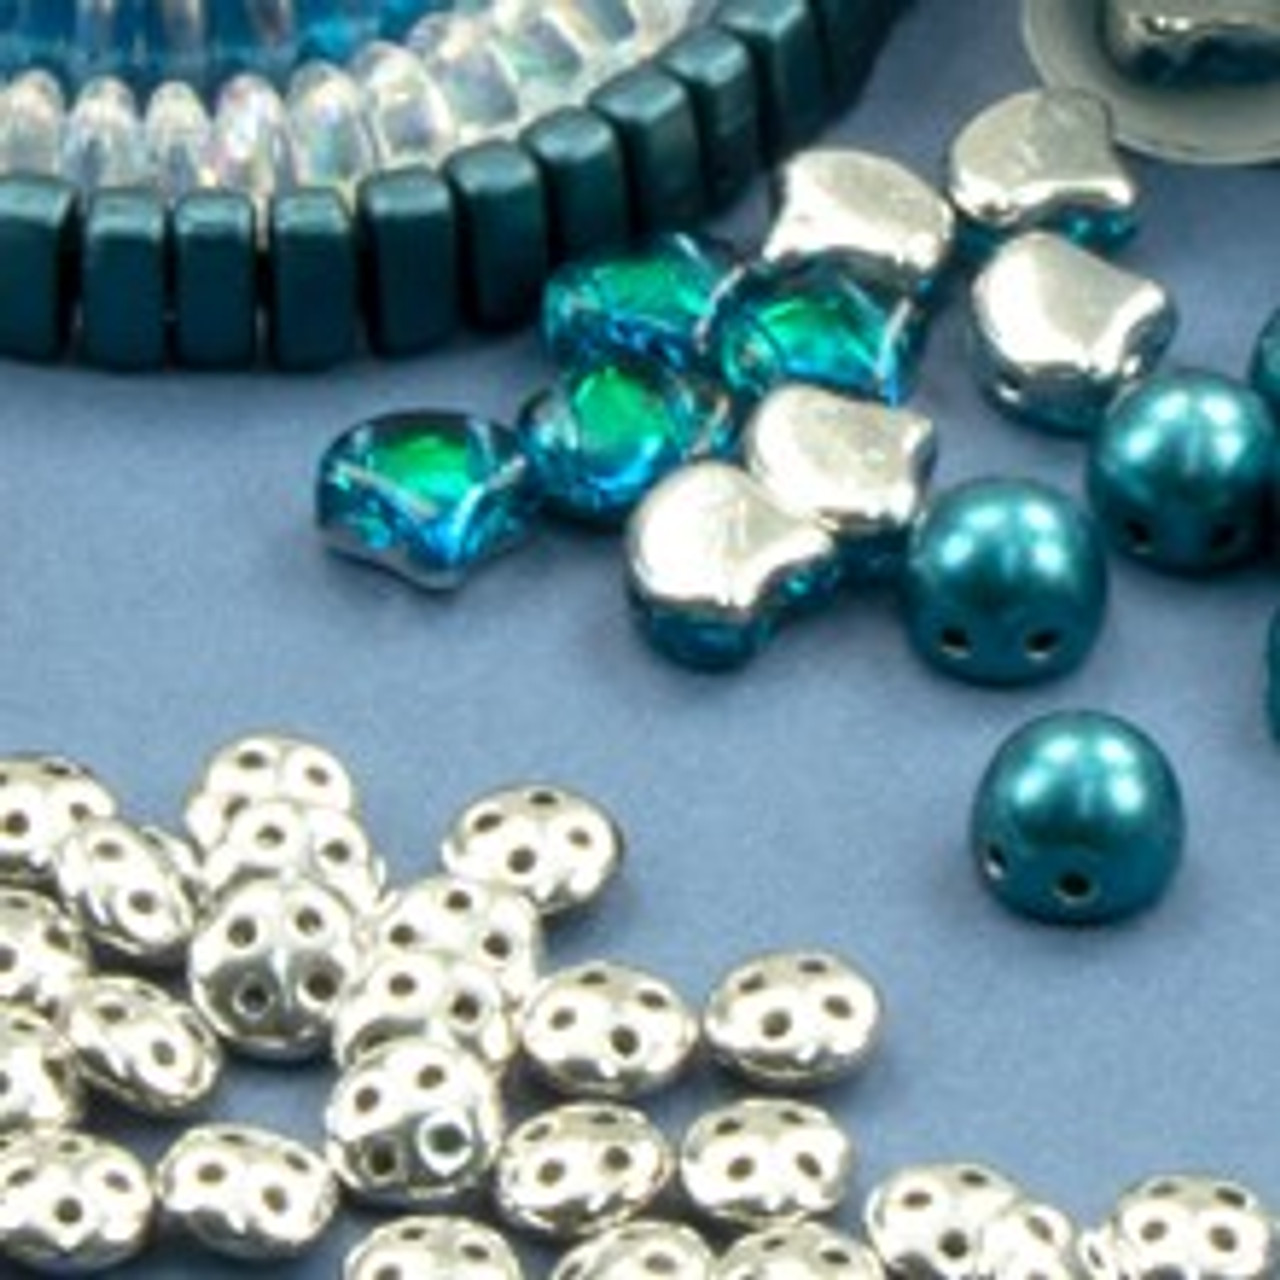 Make Eye-catching Jewelry Using Unique Wholesale extra large beads